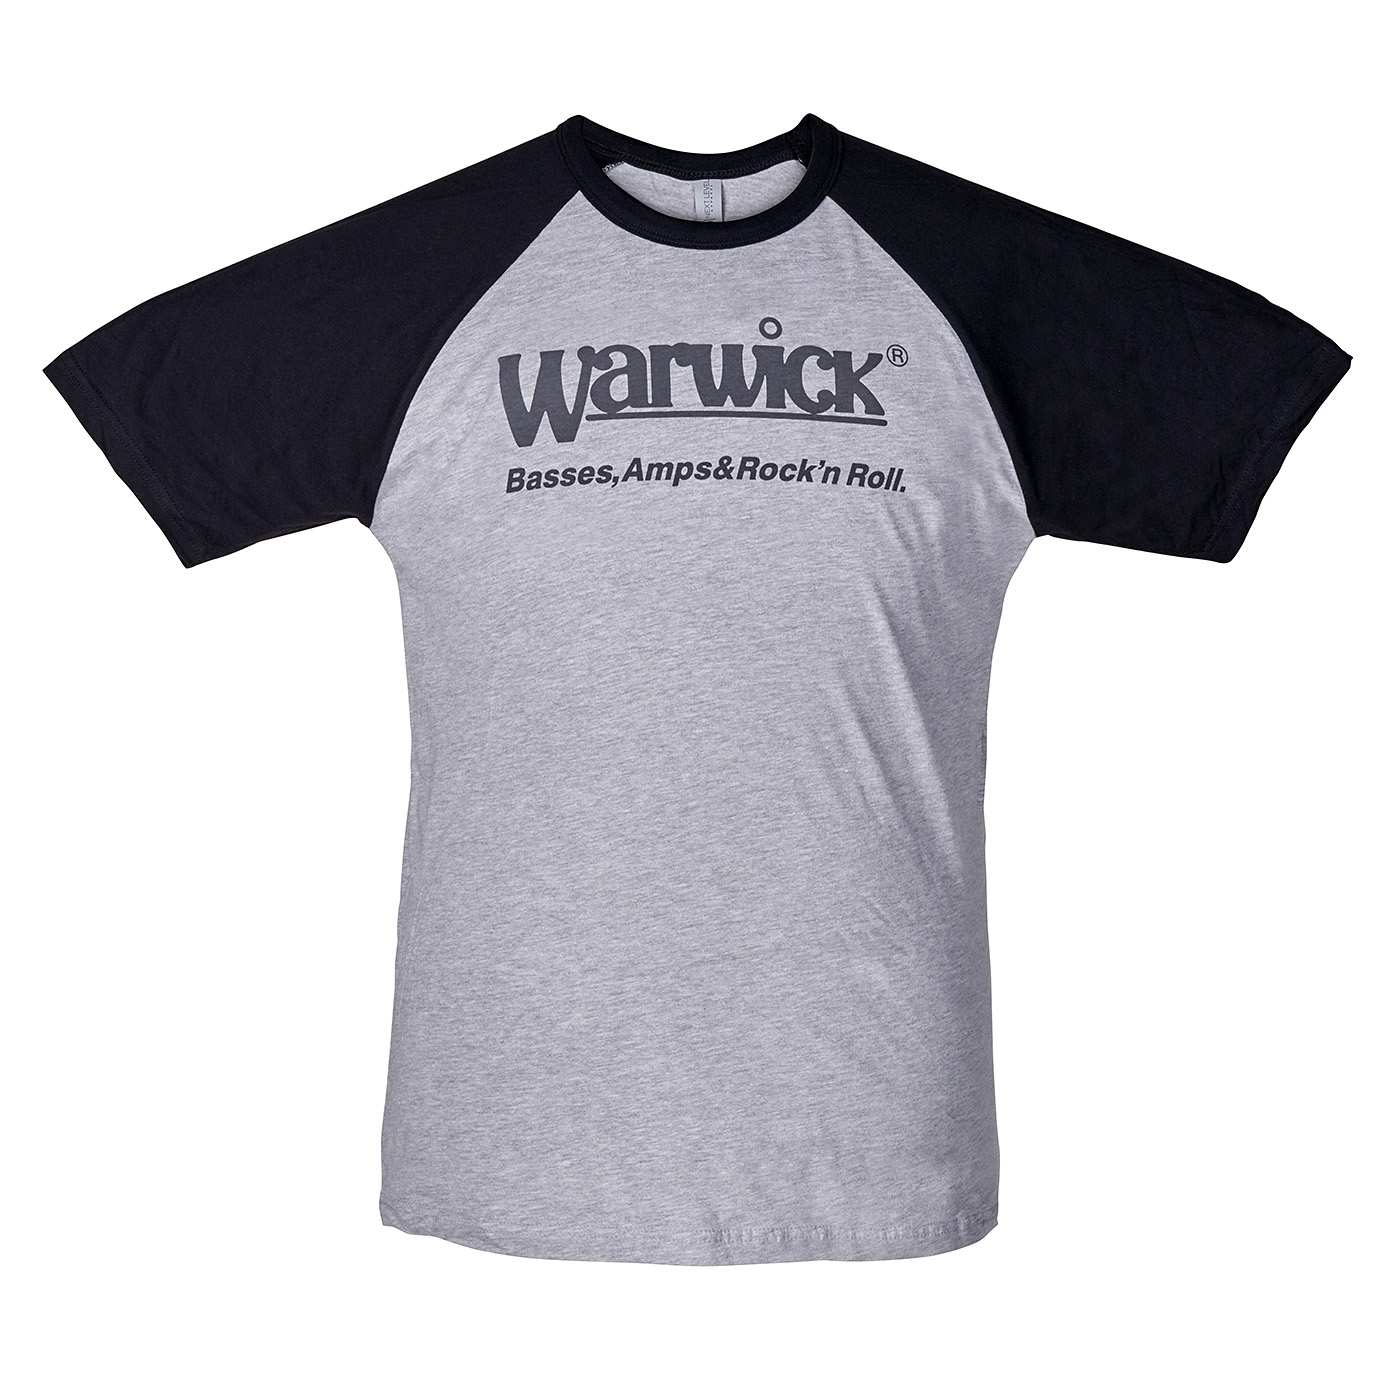 Warwick Promo - Basses, Amps & Rock'n'Roll Baseball T-Shirt, Gray/Black - Size XL